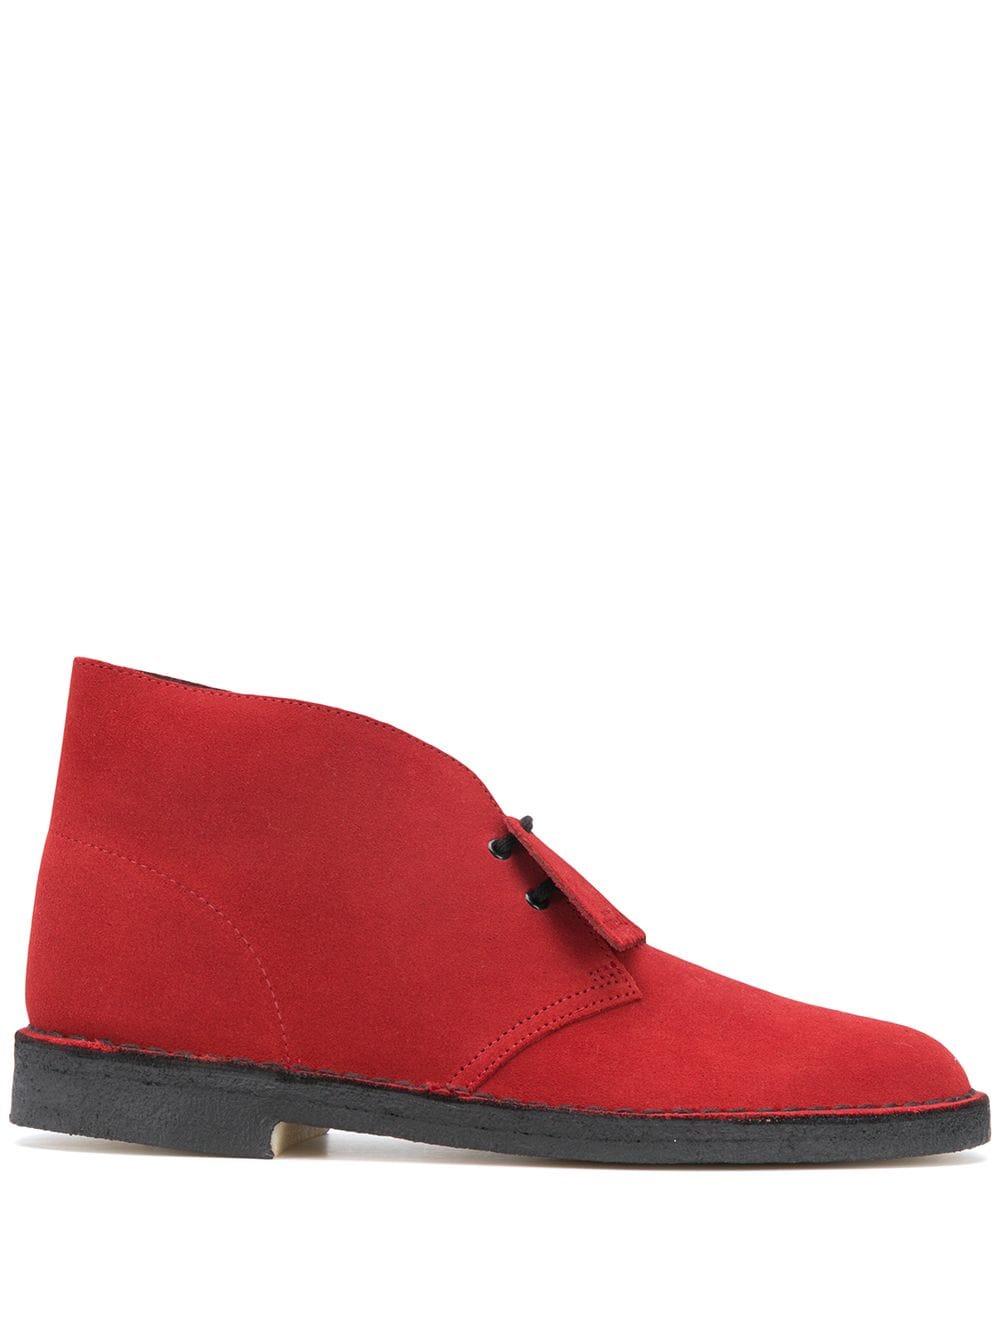 Brandy Suede Desert Boots in Red for Men | Lyst